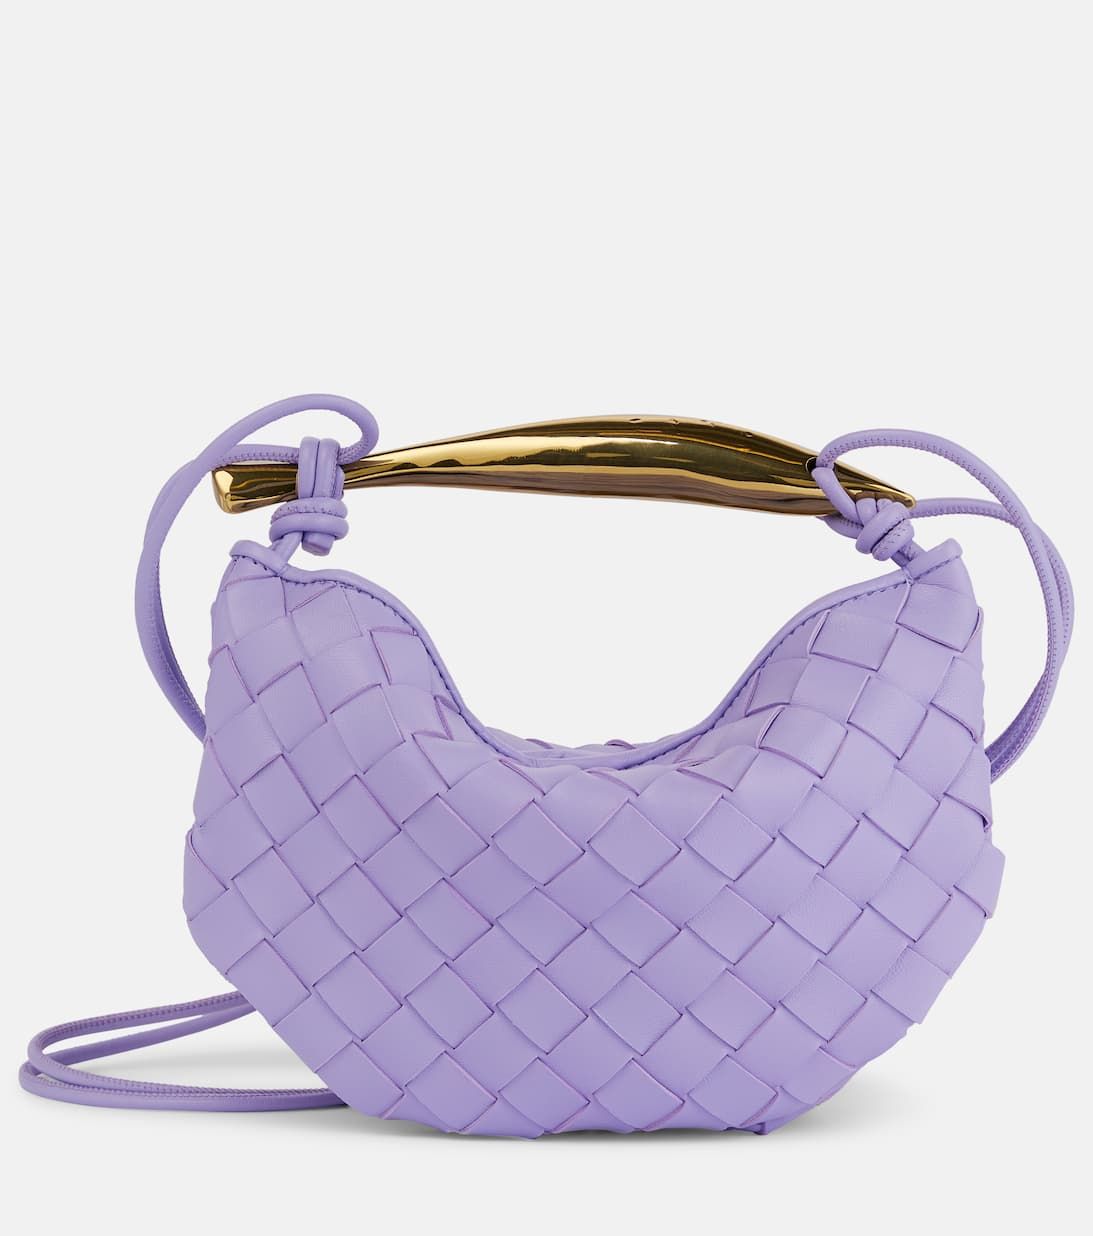 Jeulia Glitter Sparkling Envelope Handbag Clutch Purse Evening Bag | Clutch  purse evening, Clutch purse, Envelope handbag